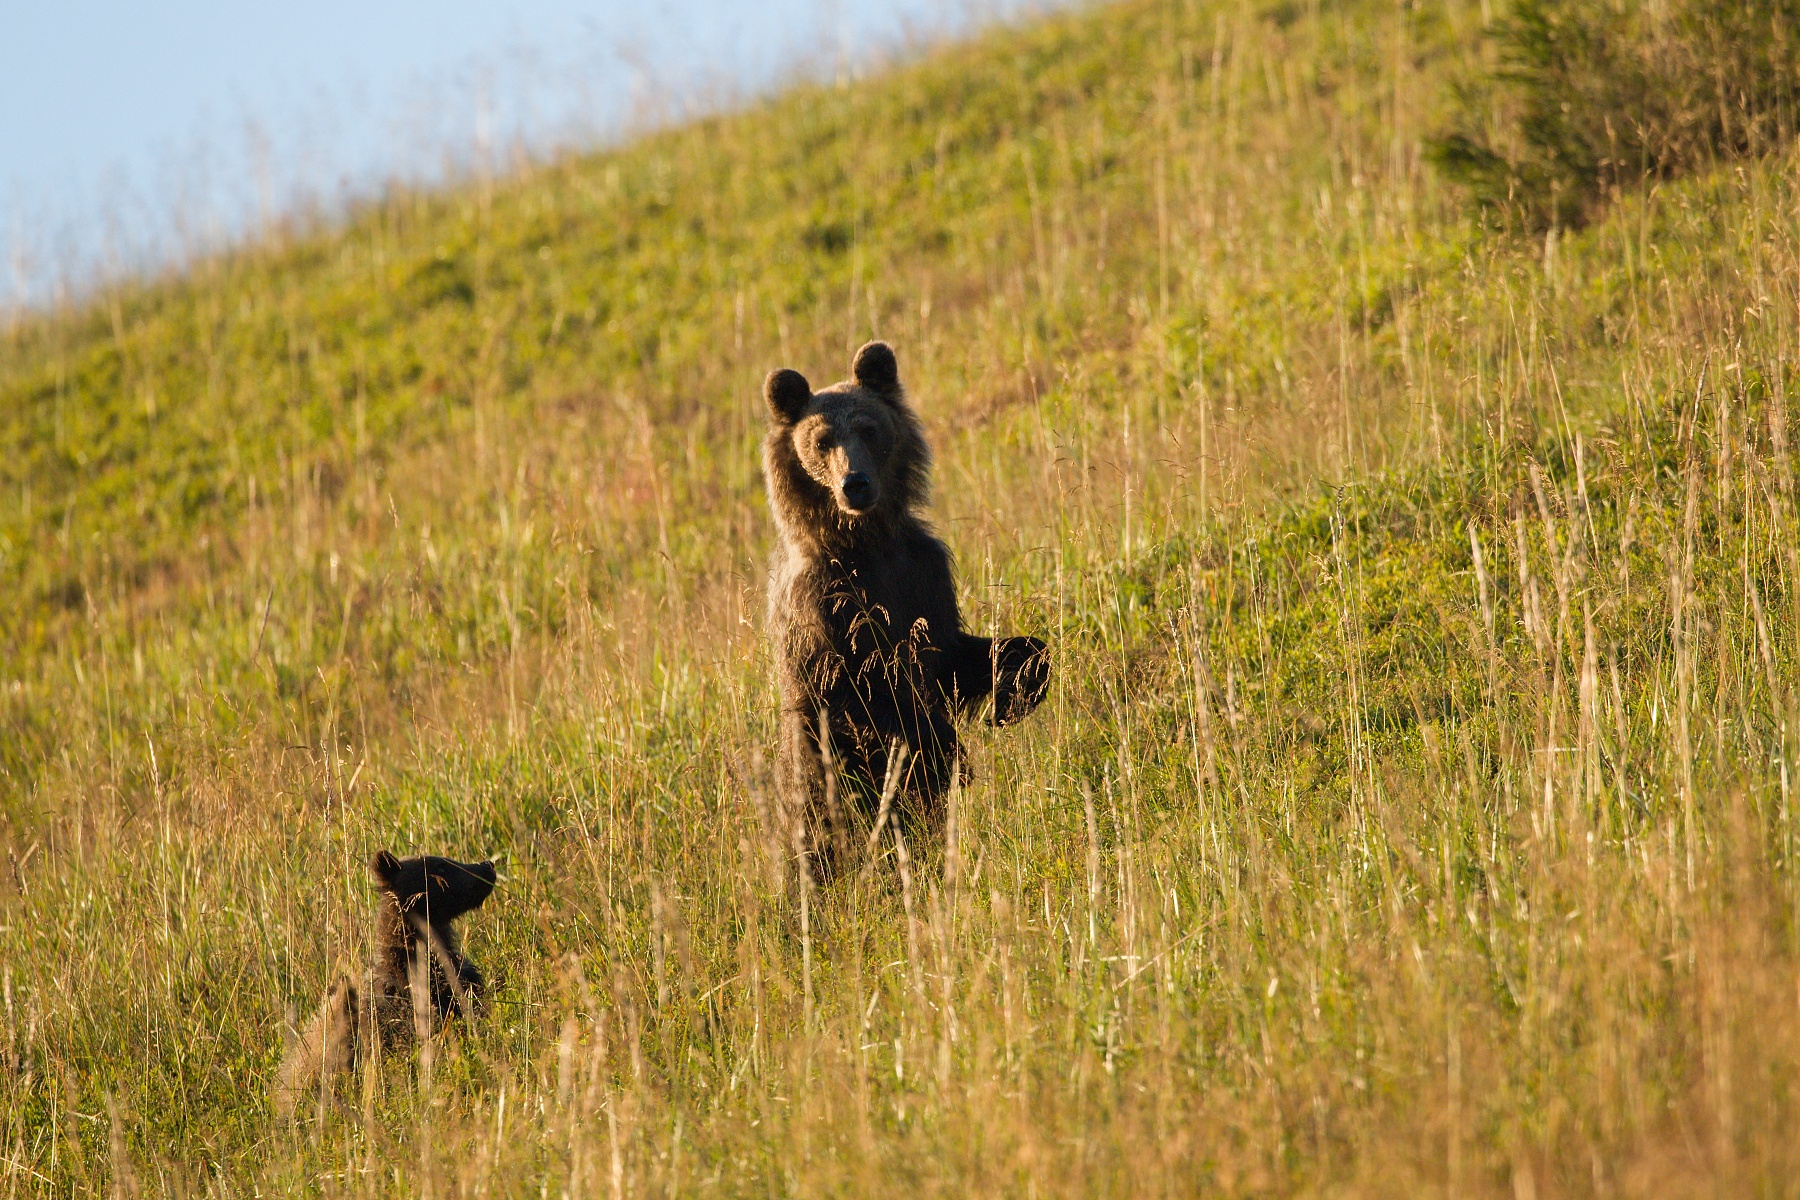 medveď hnedý (Ursus arctos) Brown bear, Veľká Fatra, Slovensko <br /> Canon EOS 6D mark II, Canon 100-400mm, f4.5-5.6 L IS II USM, 400 mm, 1/800, f6.3, ISO 800, 21. august 2020